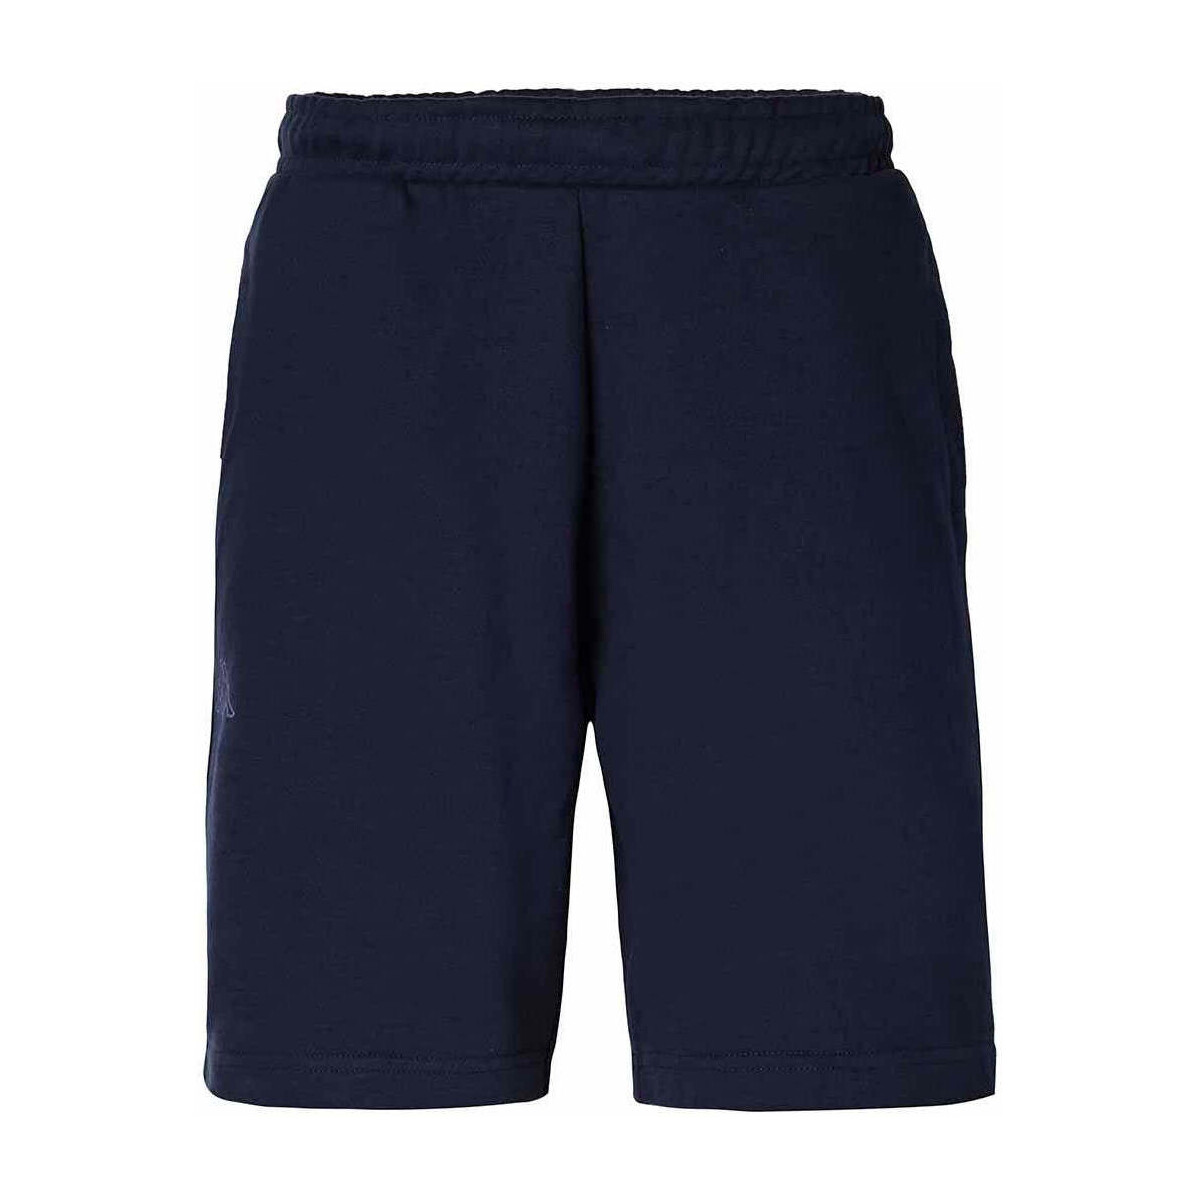 Vêtements Homme Shorts / Bermudas Kappa Short  Faiano Sportswear Bleu